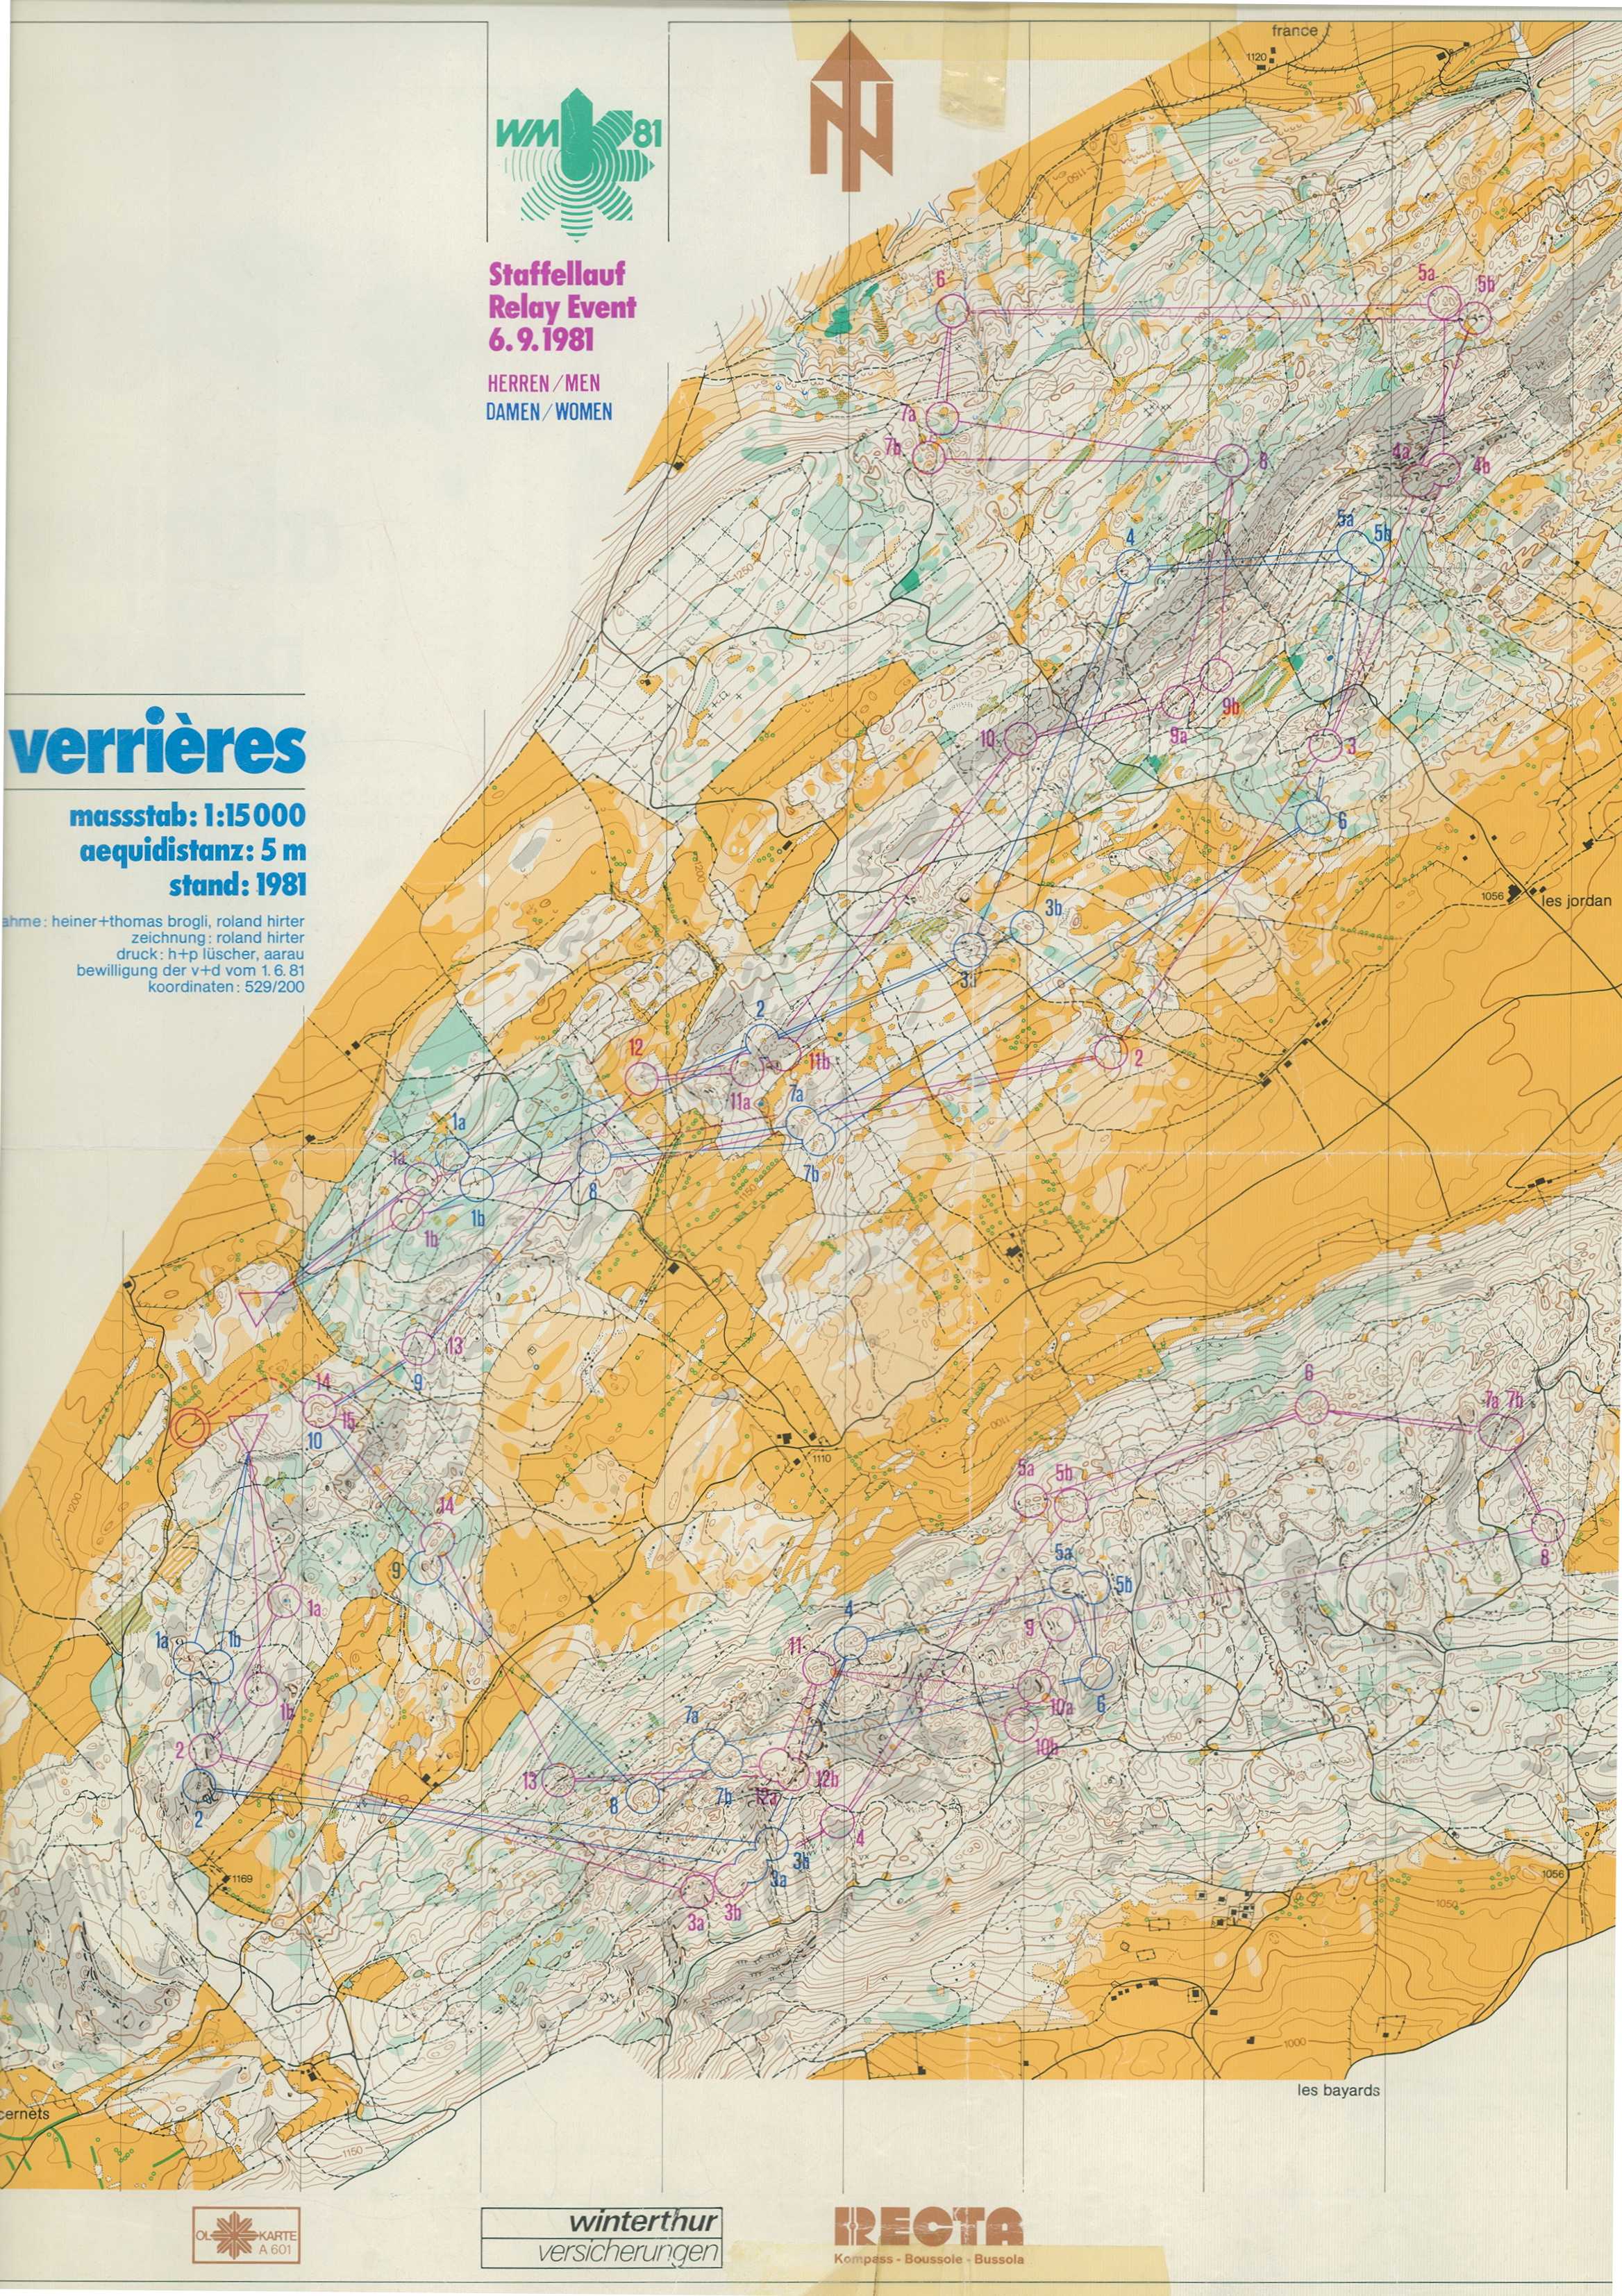 WOC / VM 1981 Les Verrières (06.09.1981)